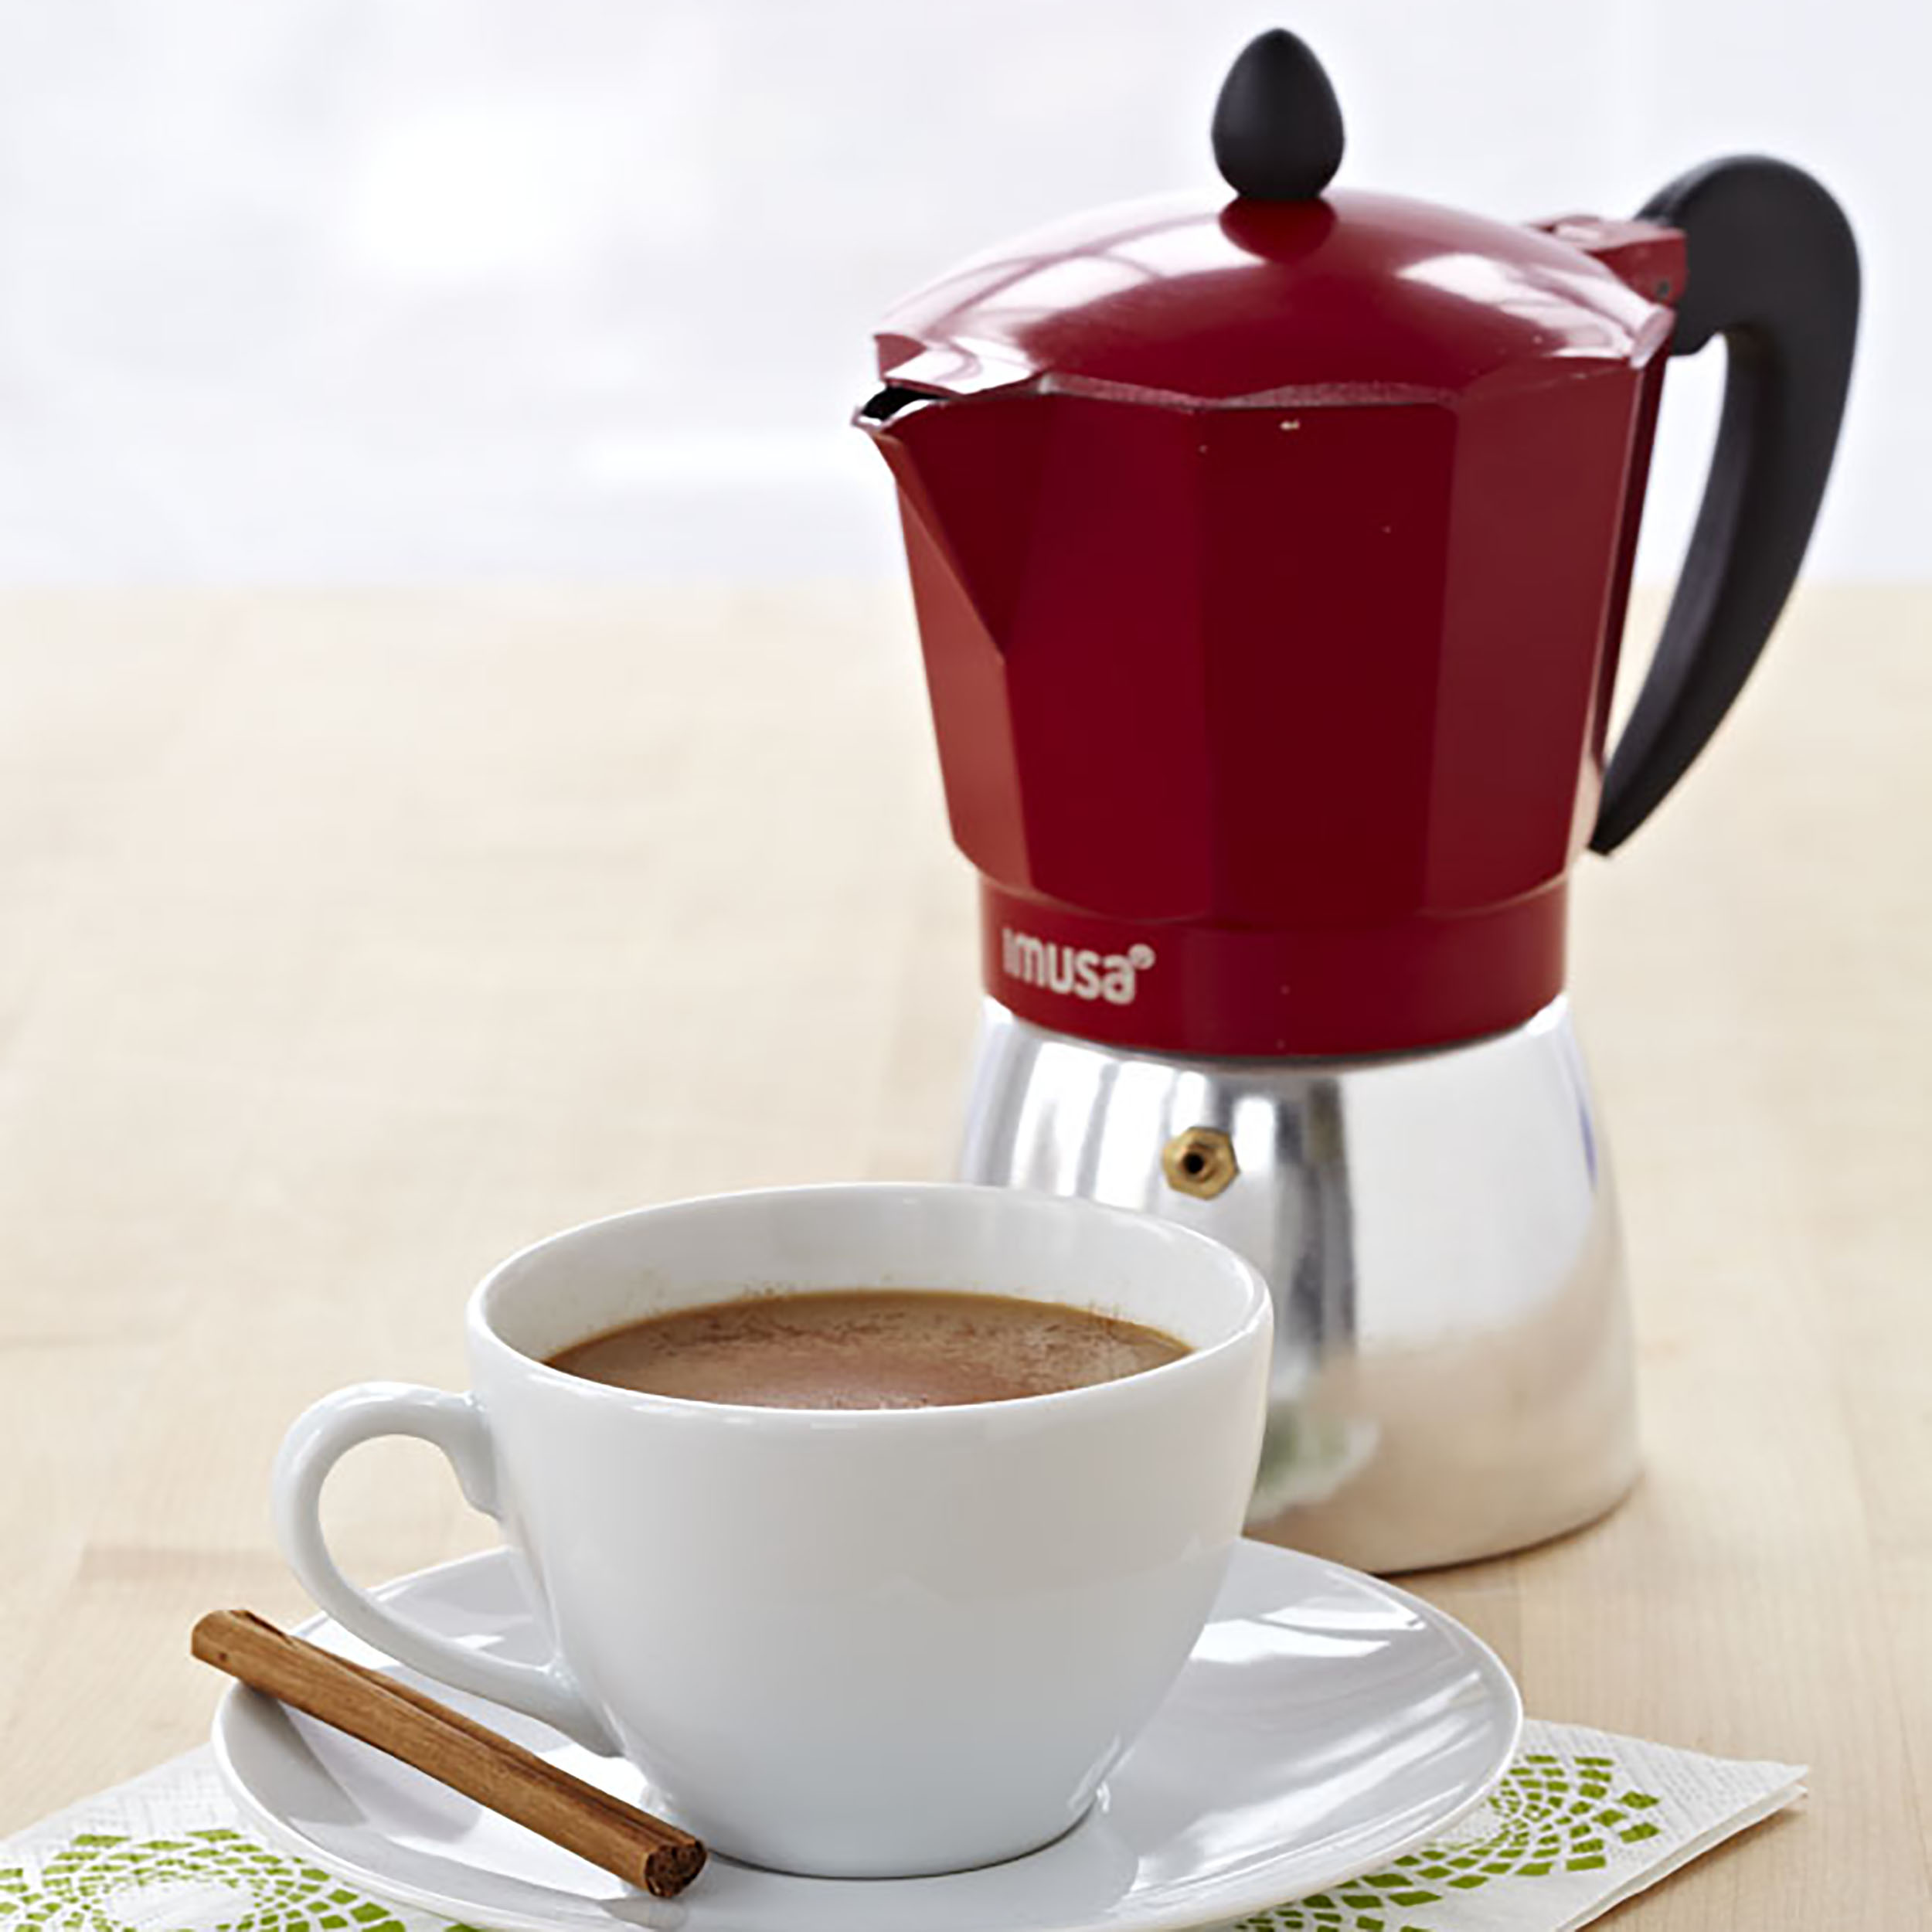 IMUSA 3-Cup Espresso Maker - Aluminum & Red